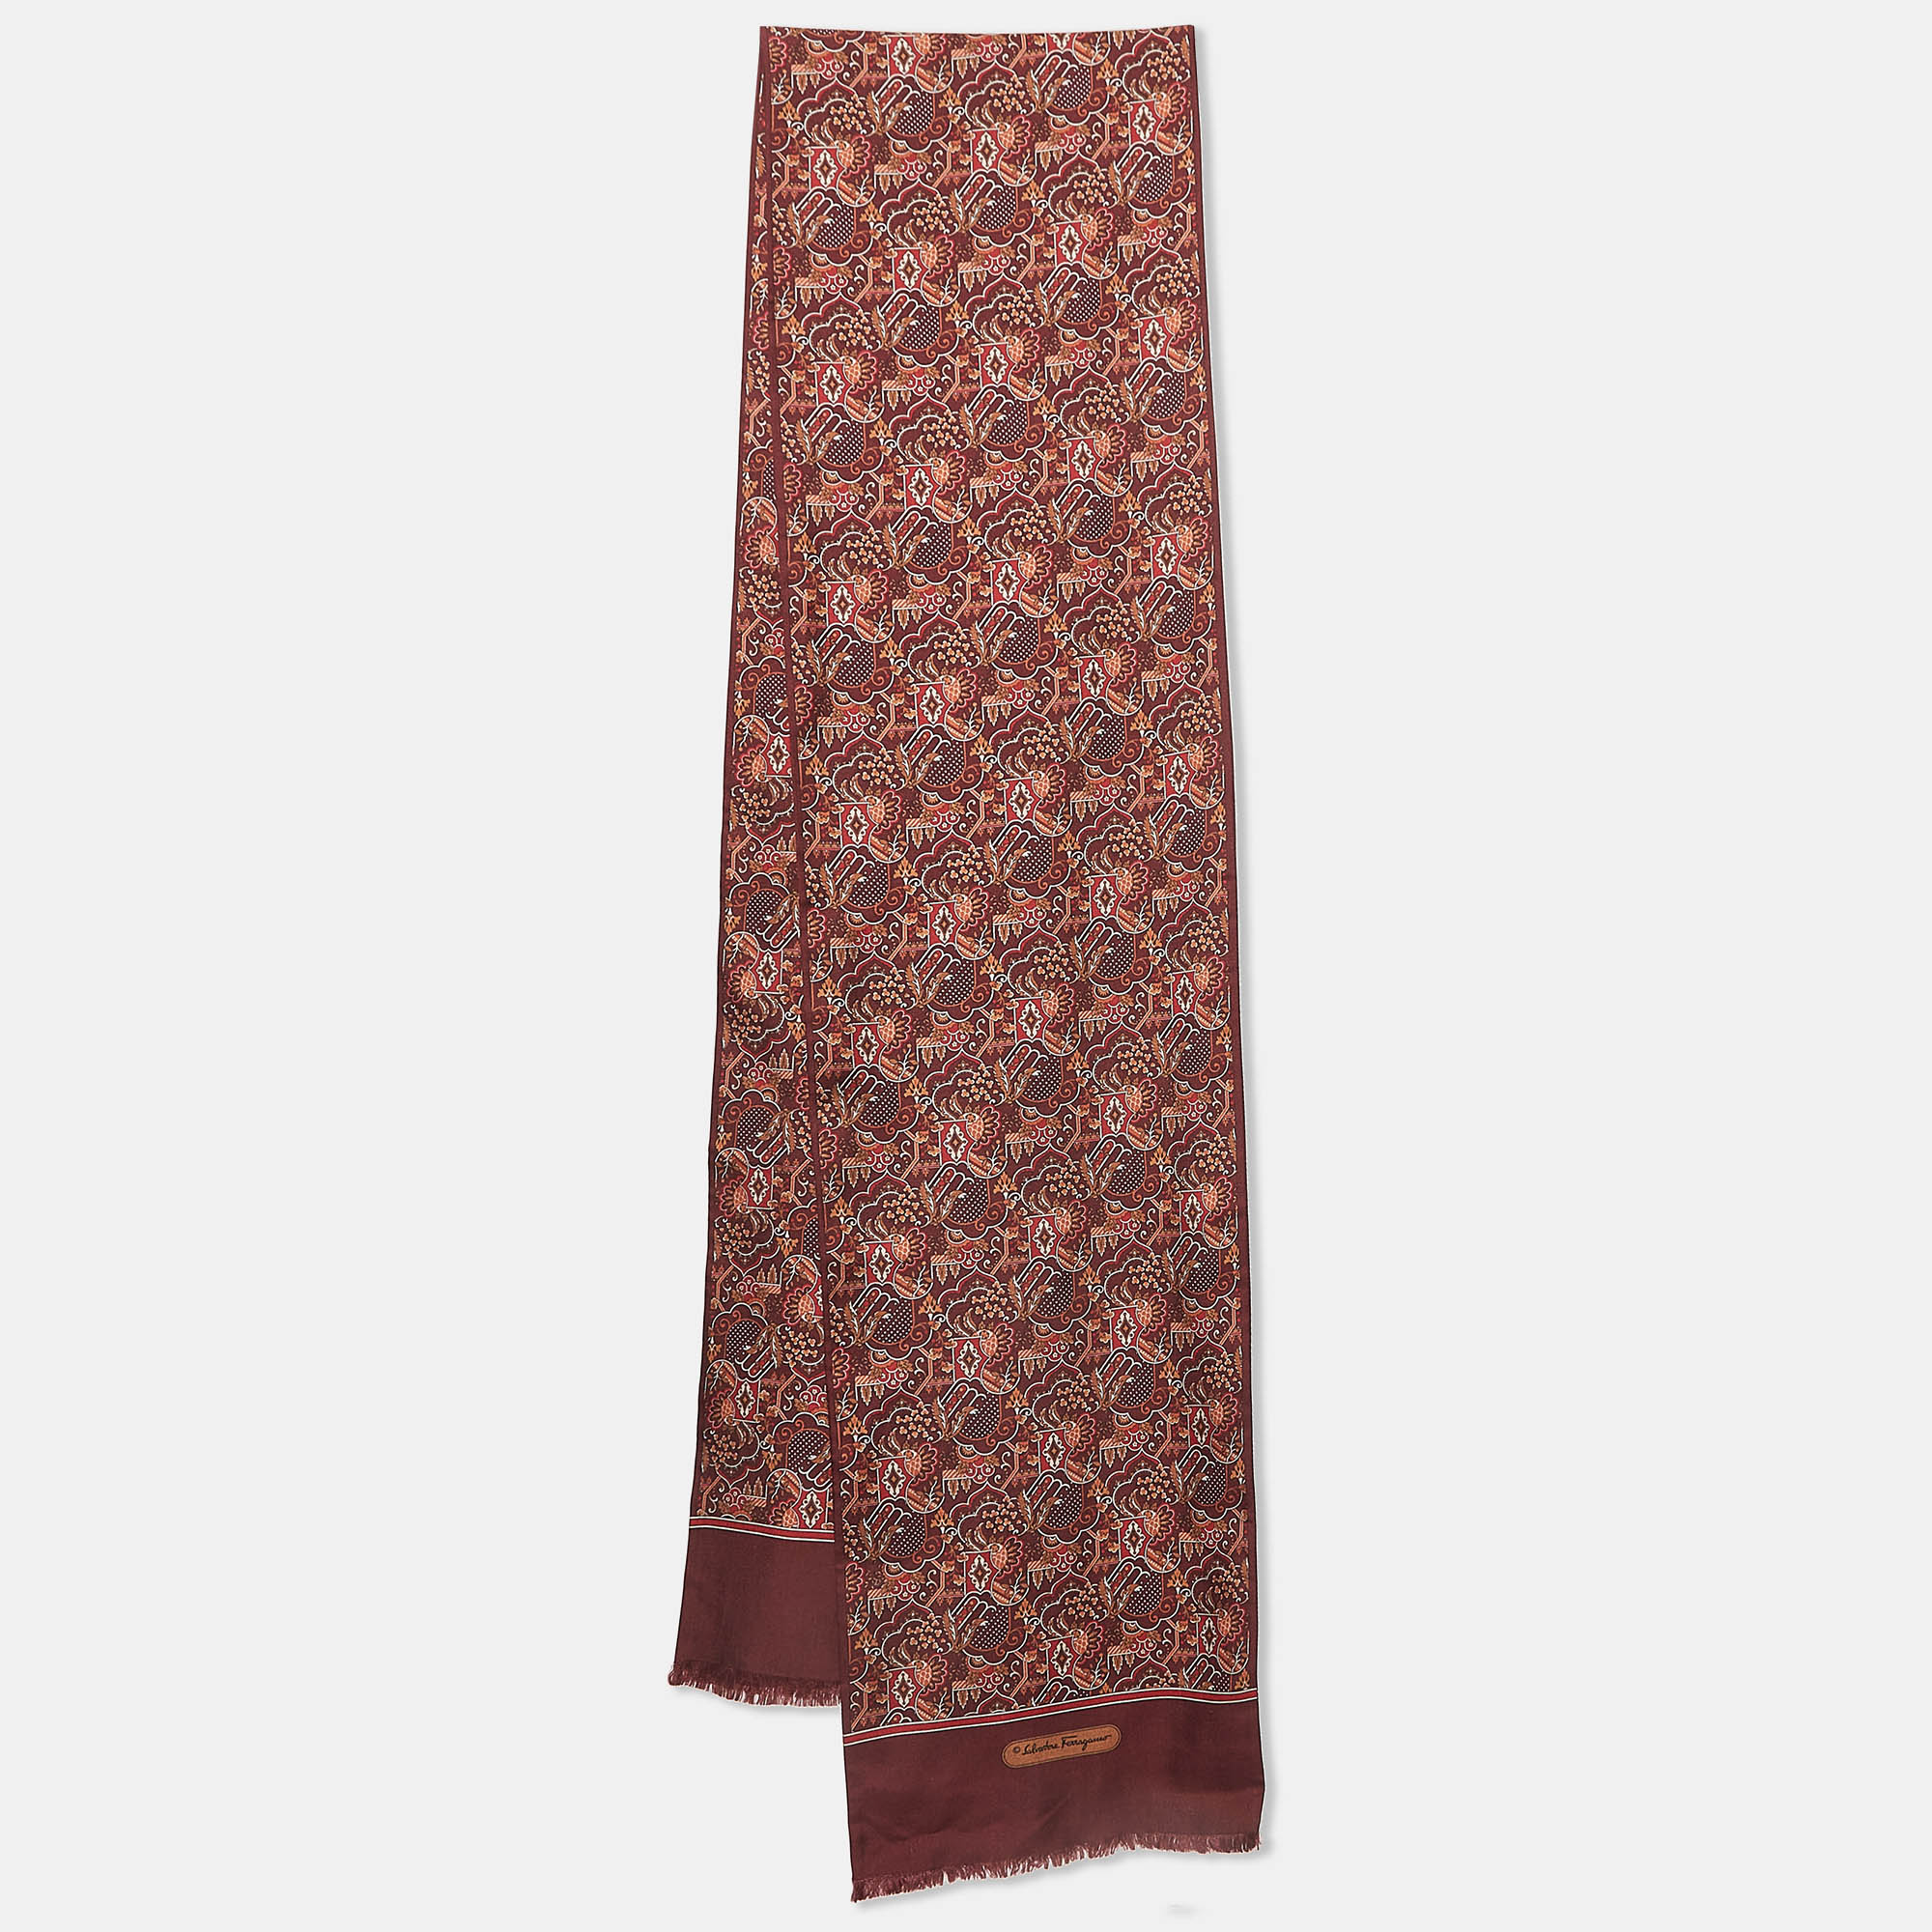 Salvatore ferragamo burgundy printed silk scarf